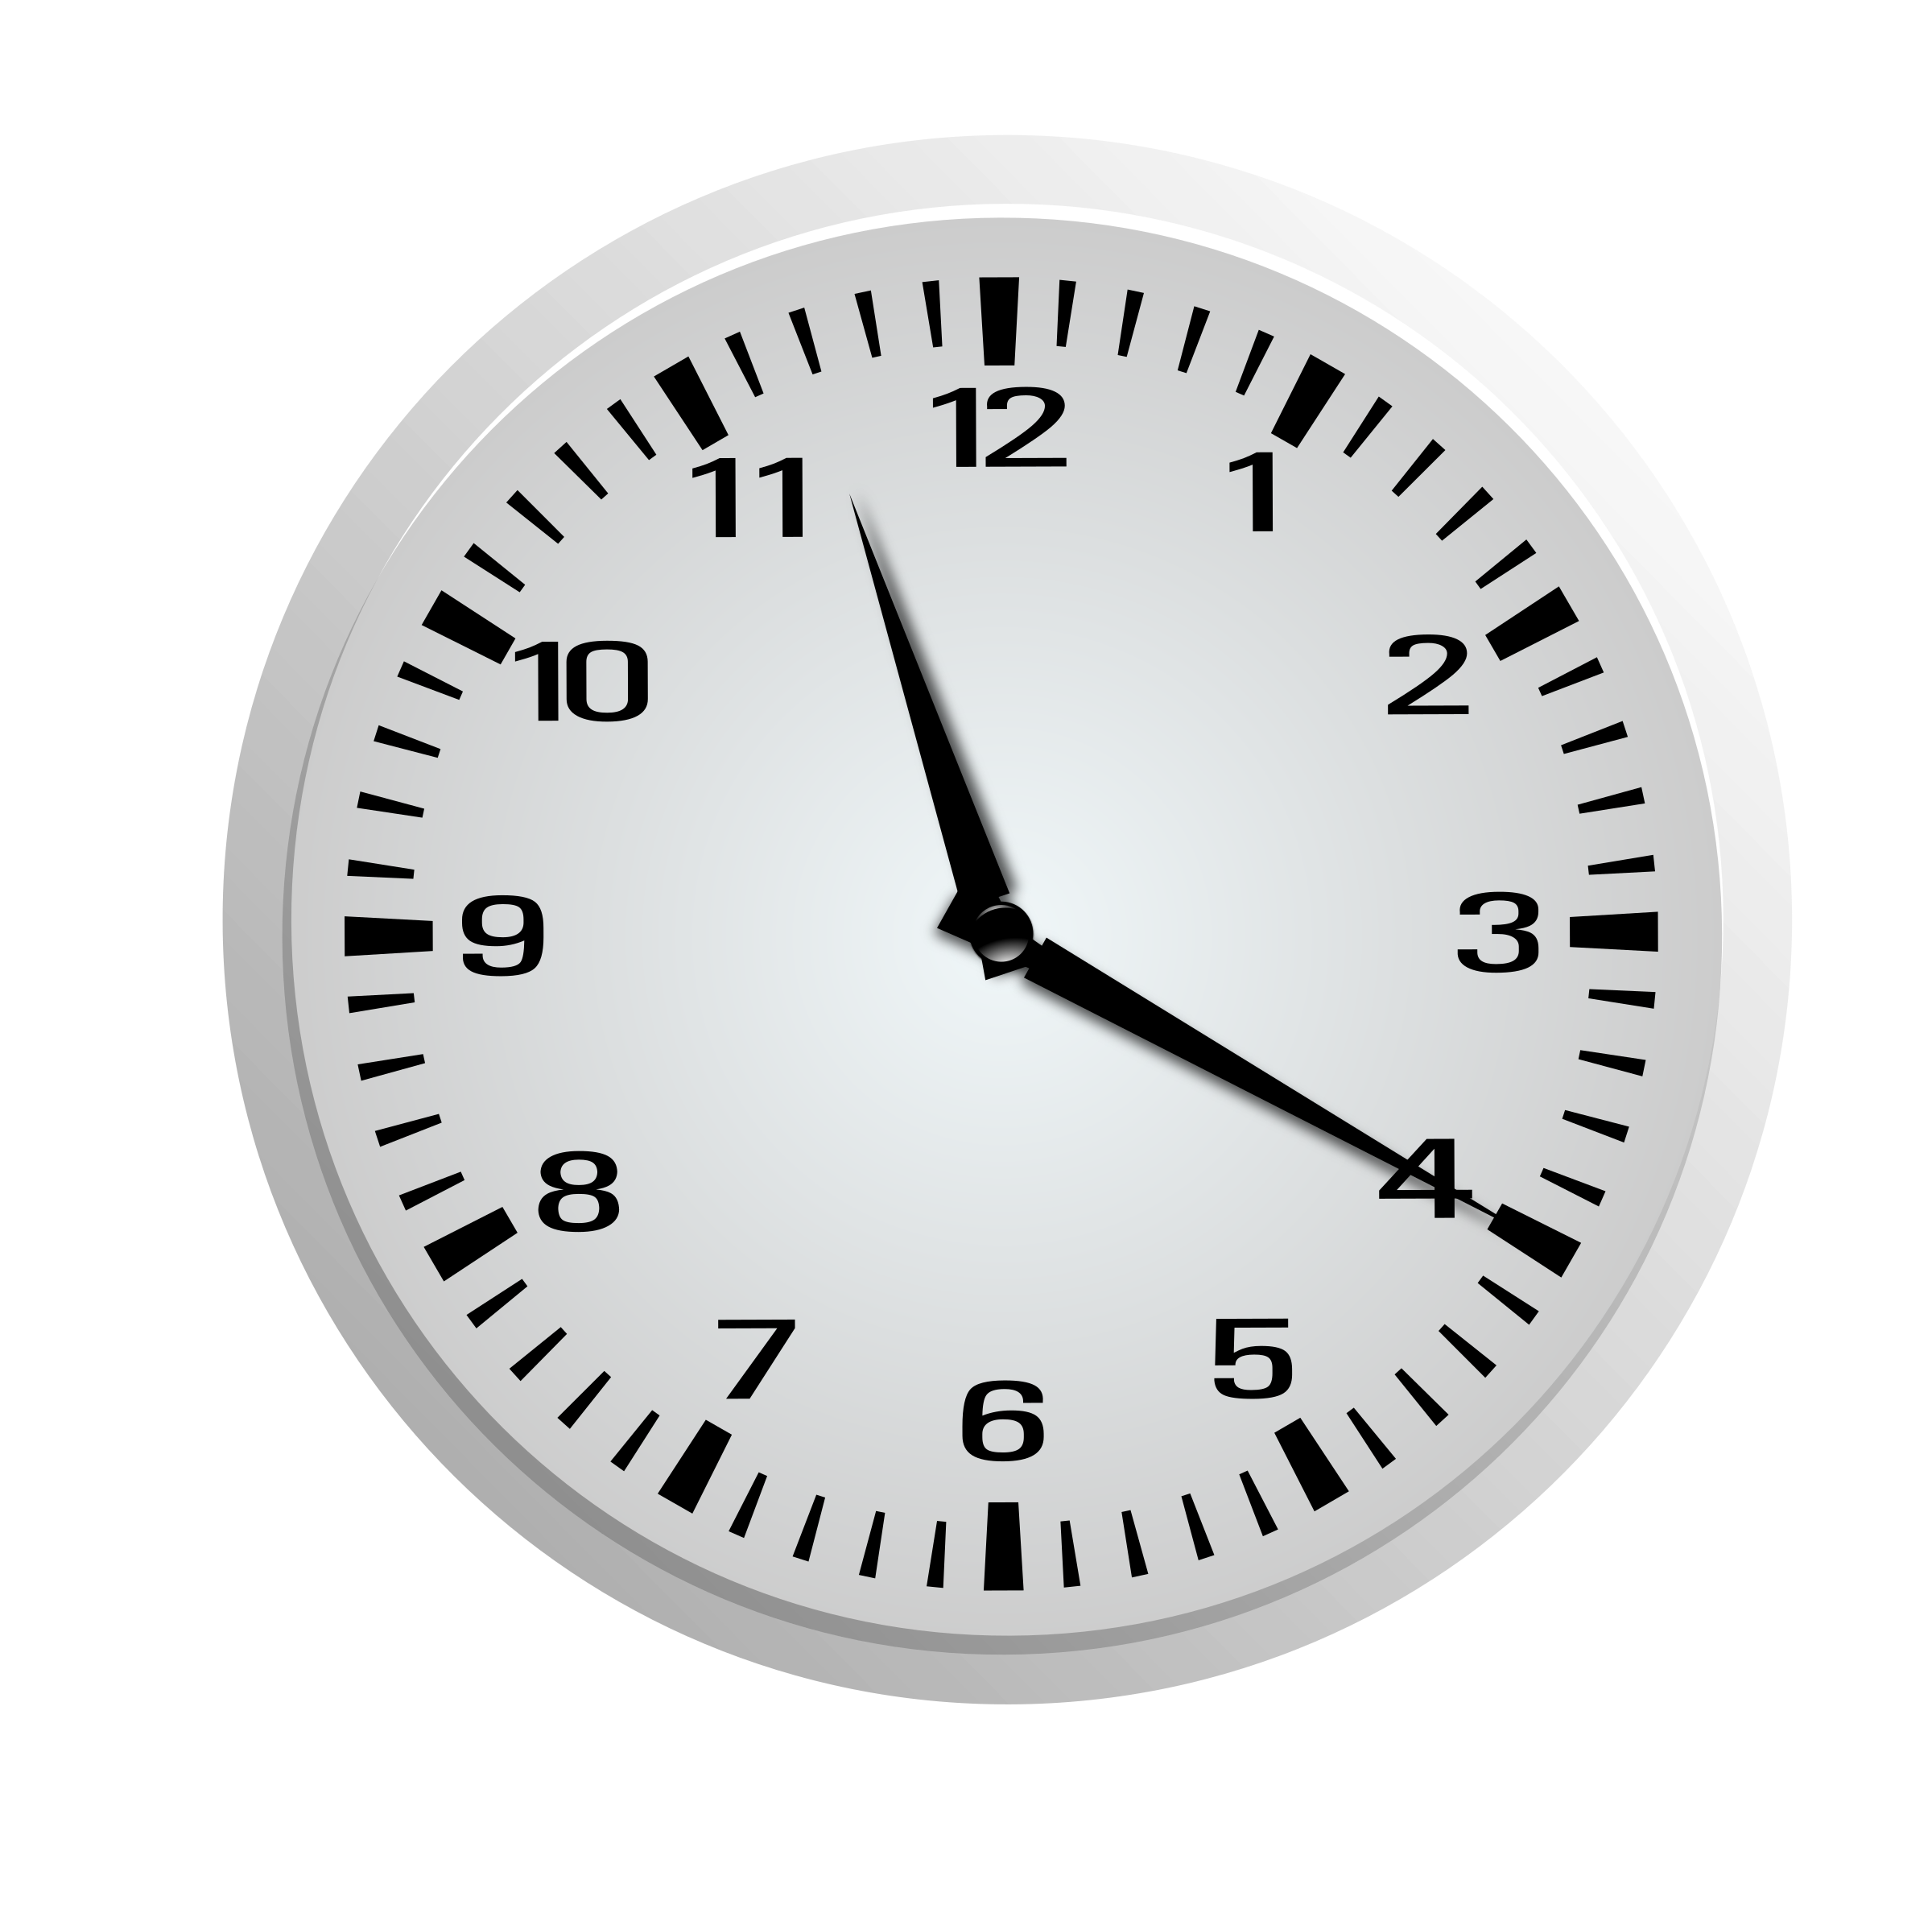 atomic clock 3 minutes to midnight